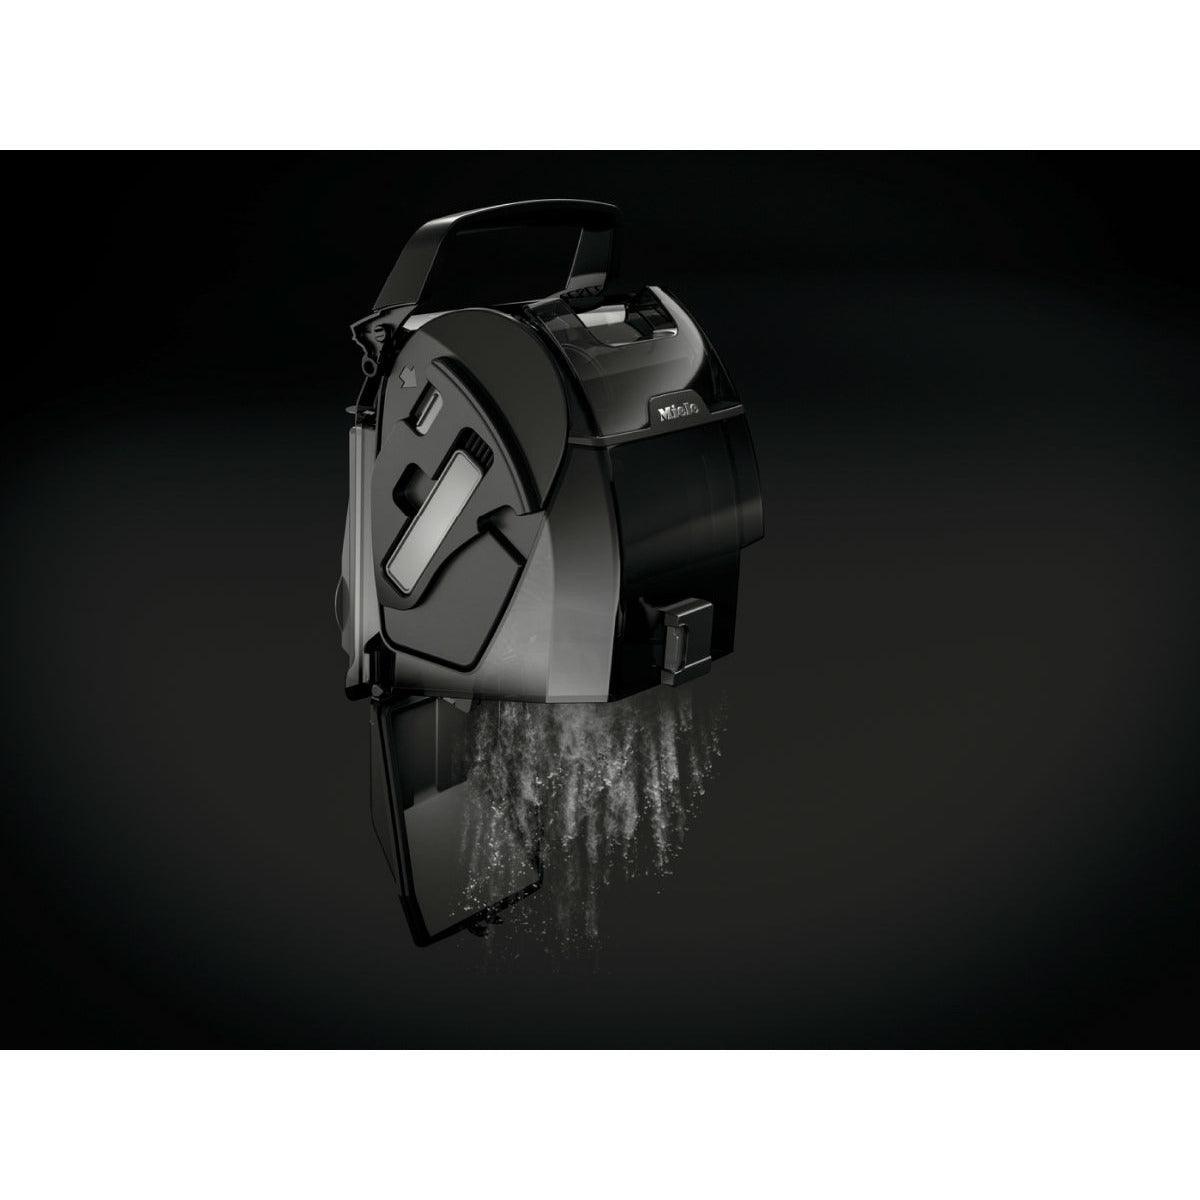 Miele Boost CX1 PowerLine Bagless Cylinder Vacuum Cleaner - Obsidian Black (7484948283580)